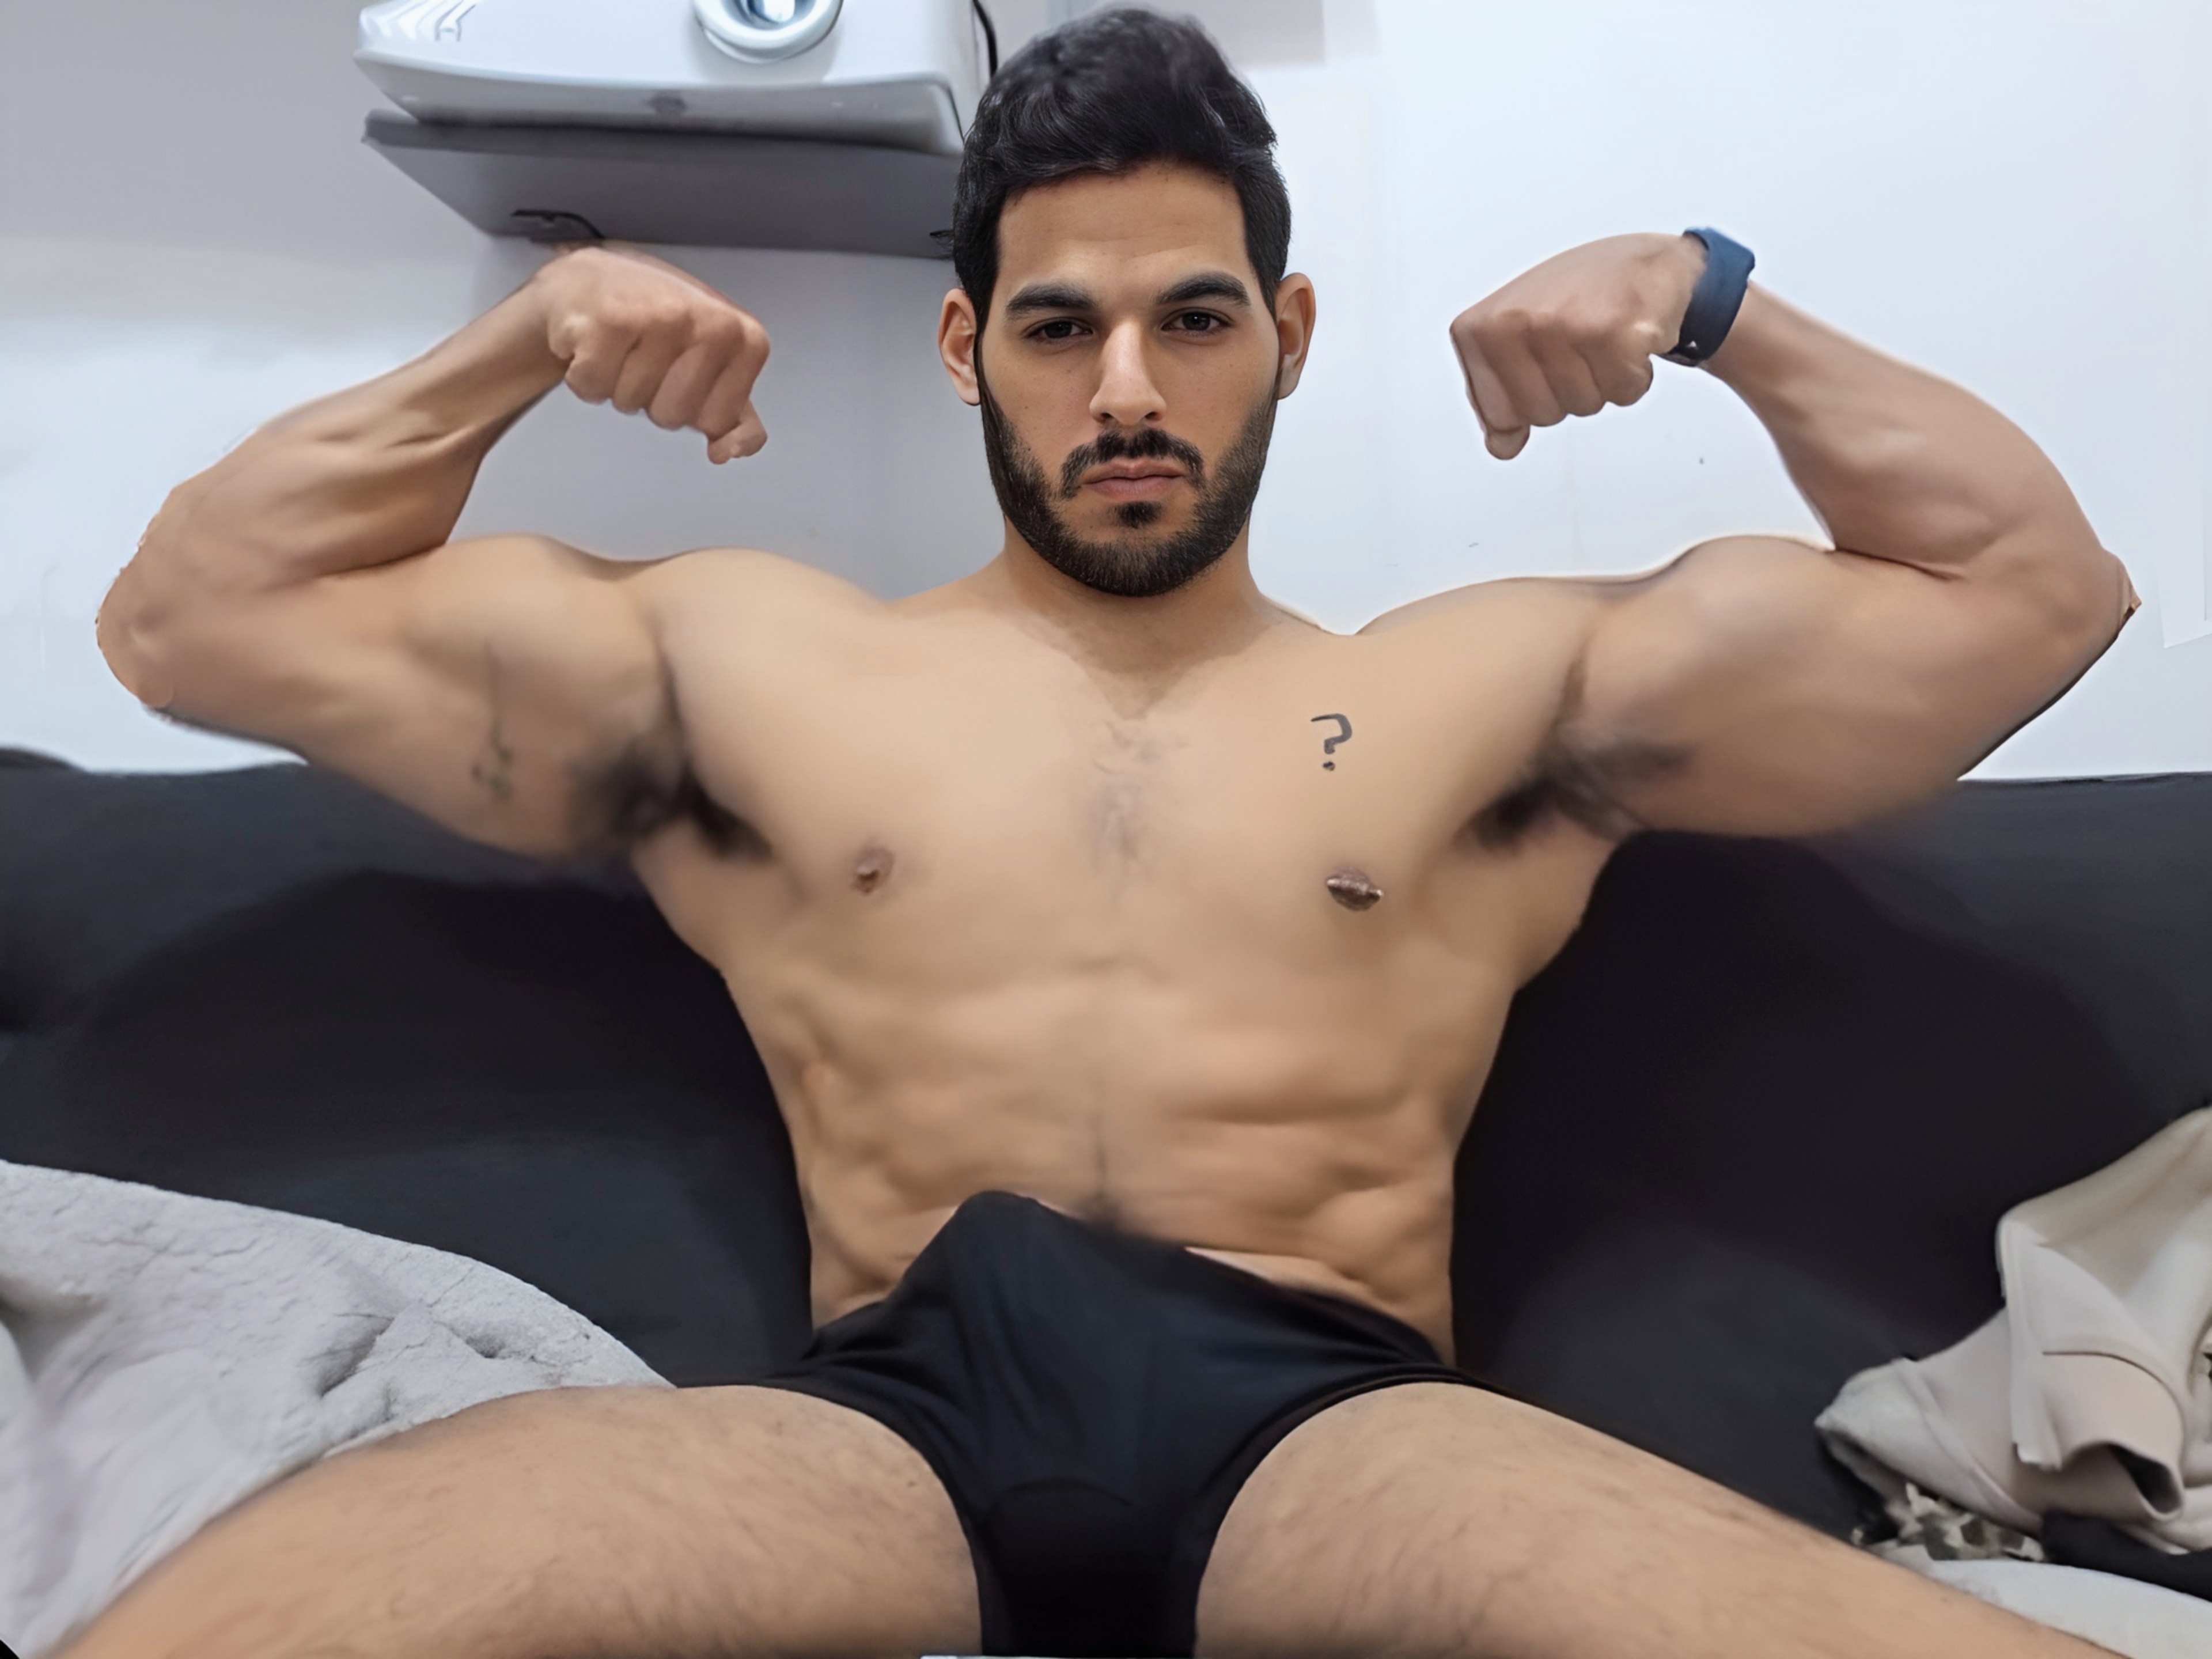 Arab master Hot Israeli Guy Cumming in His… ThisVid pic